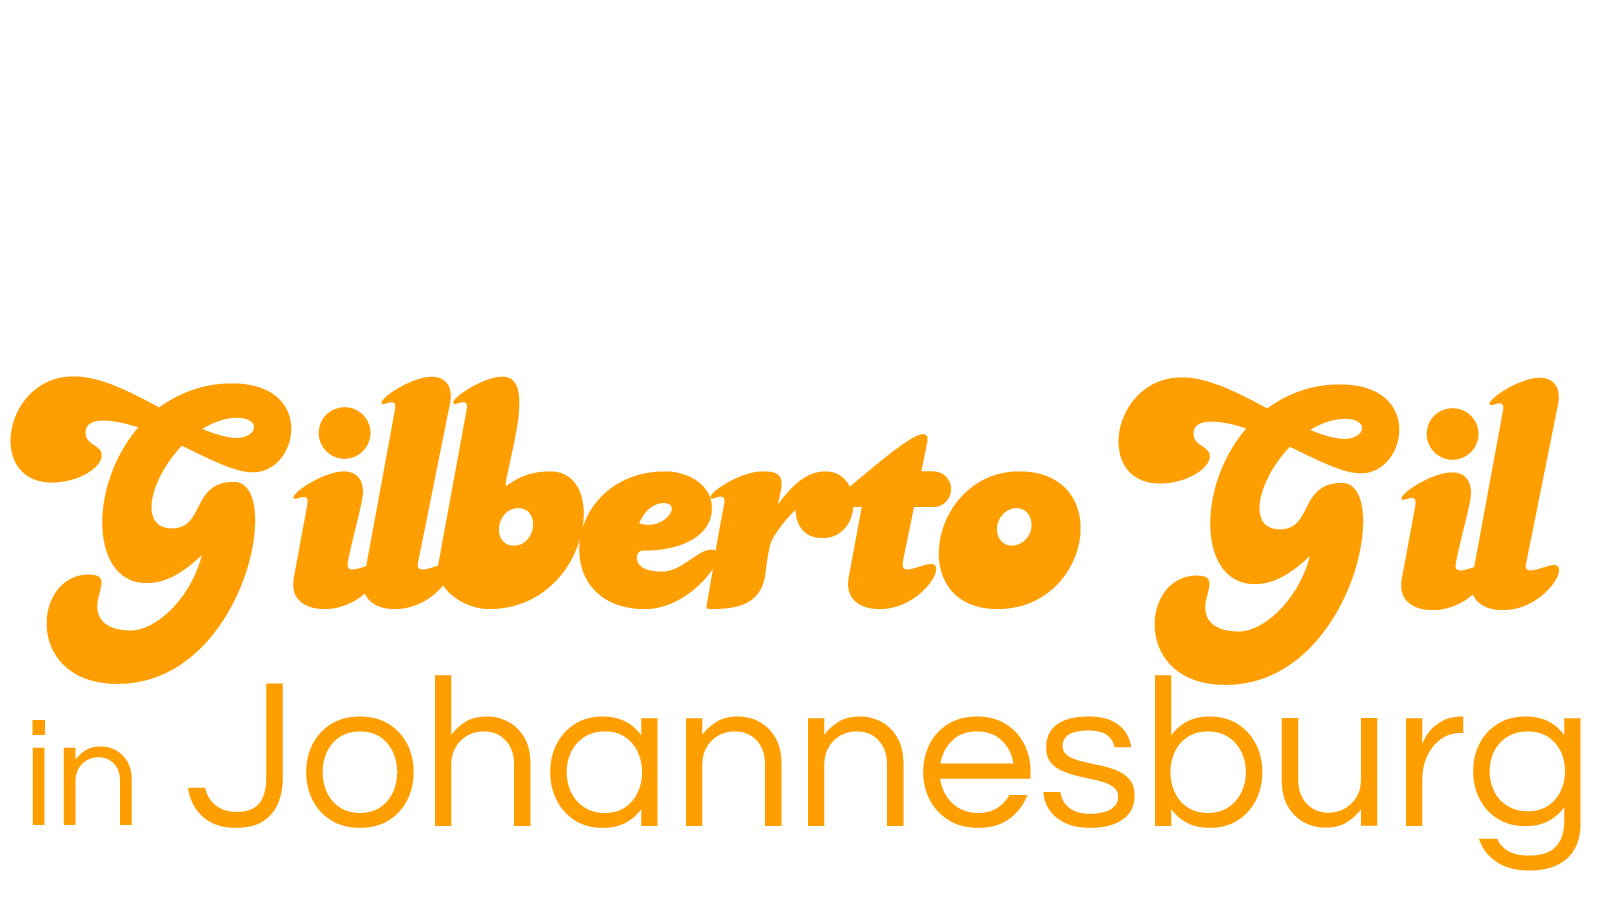 Gilberto Gil live in Johannesburg